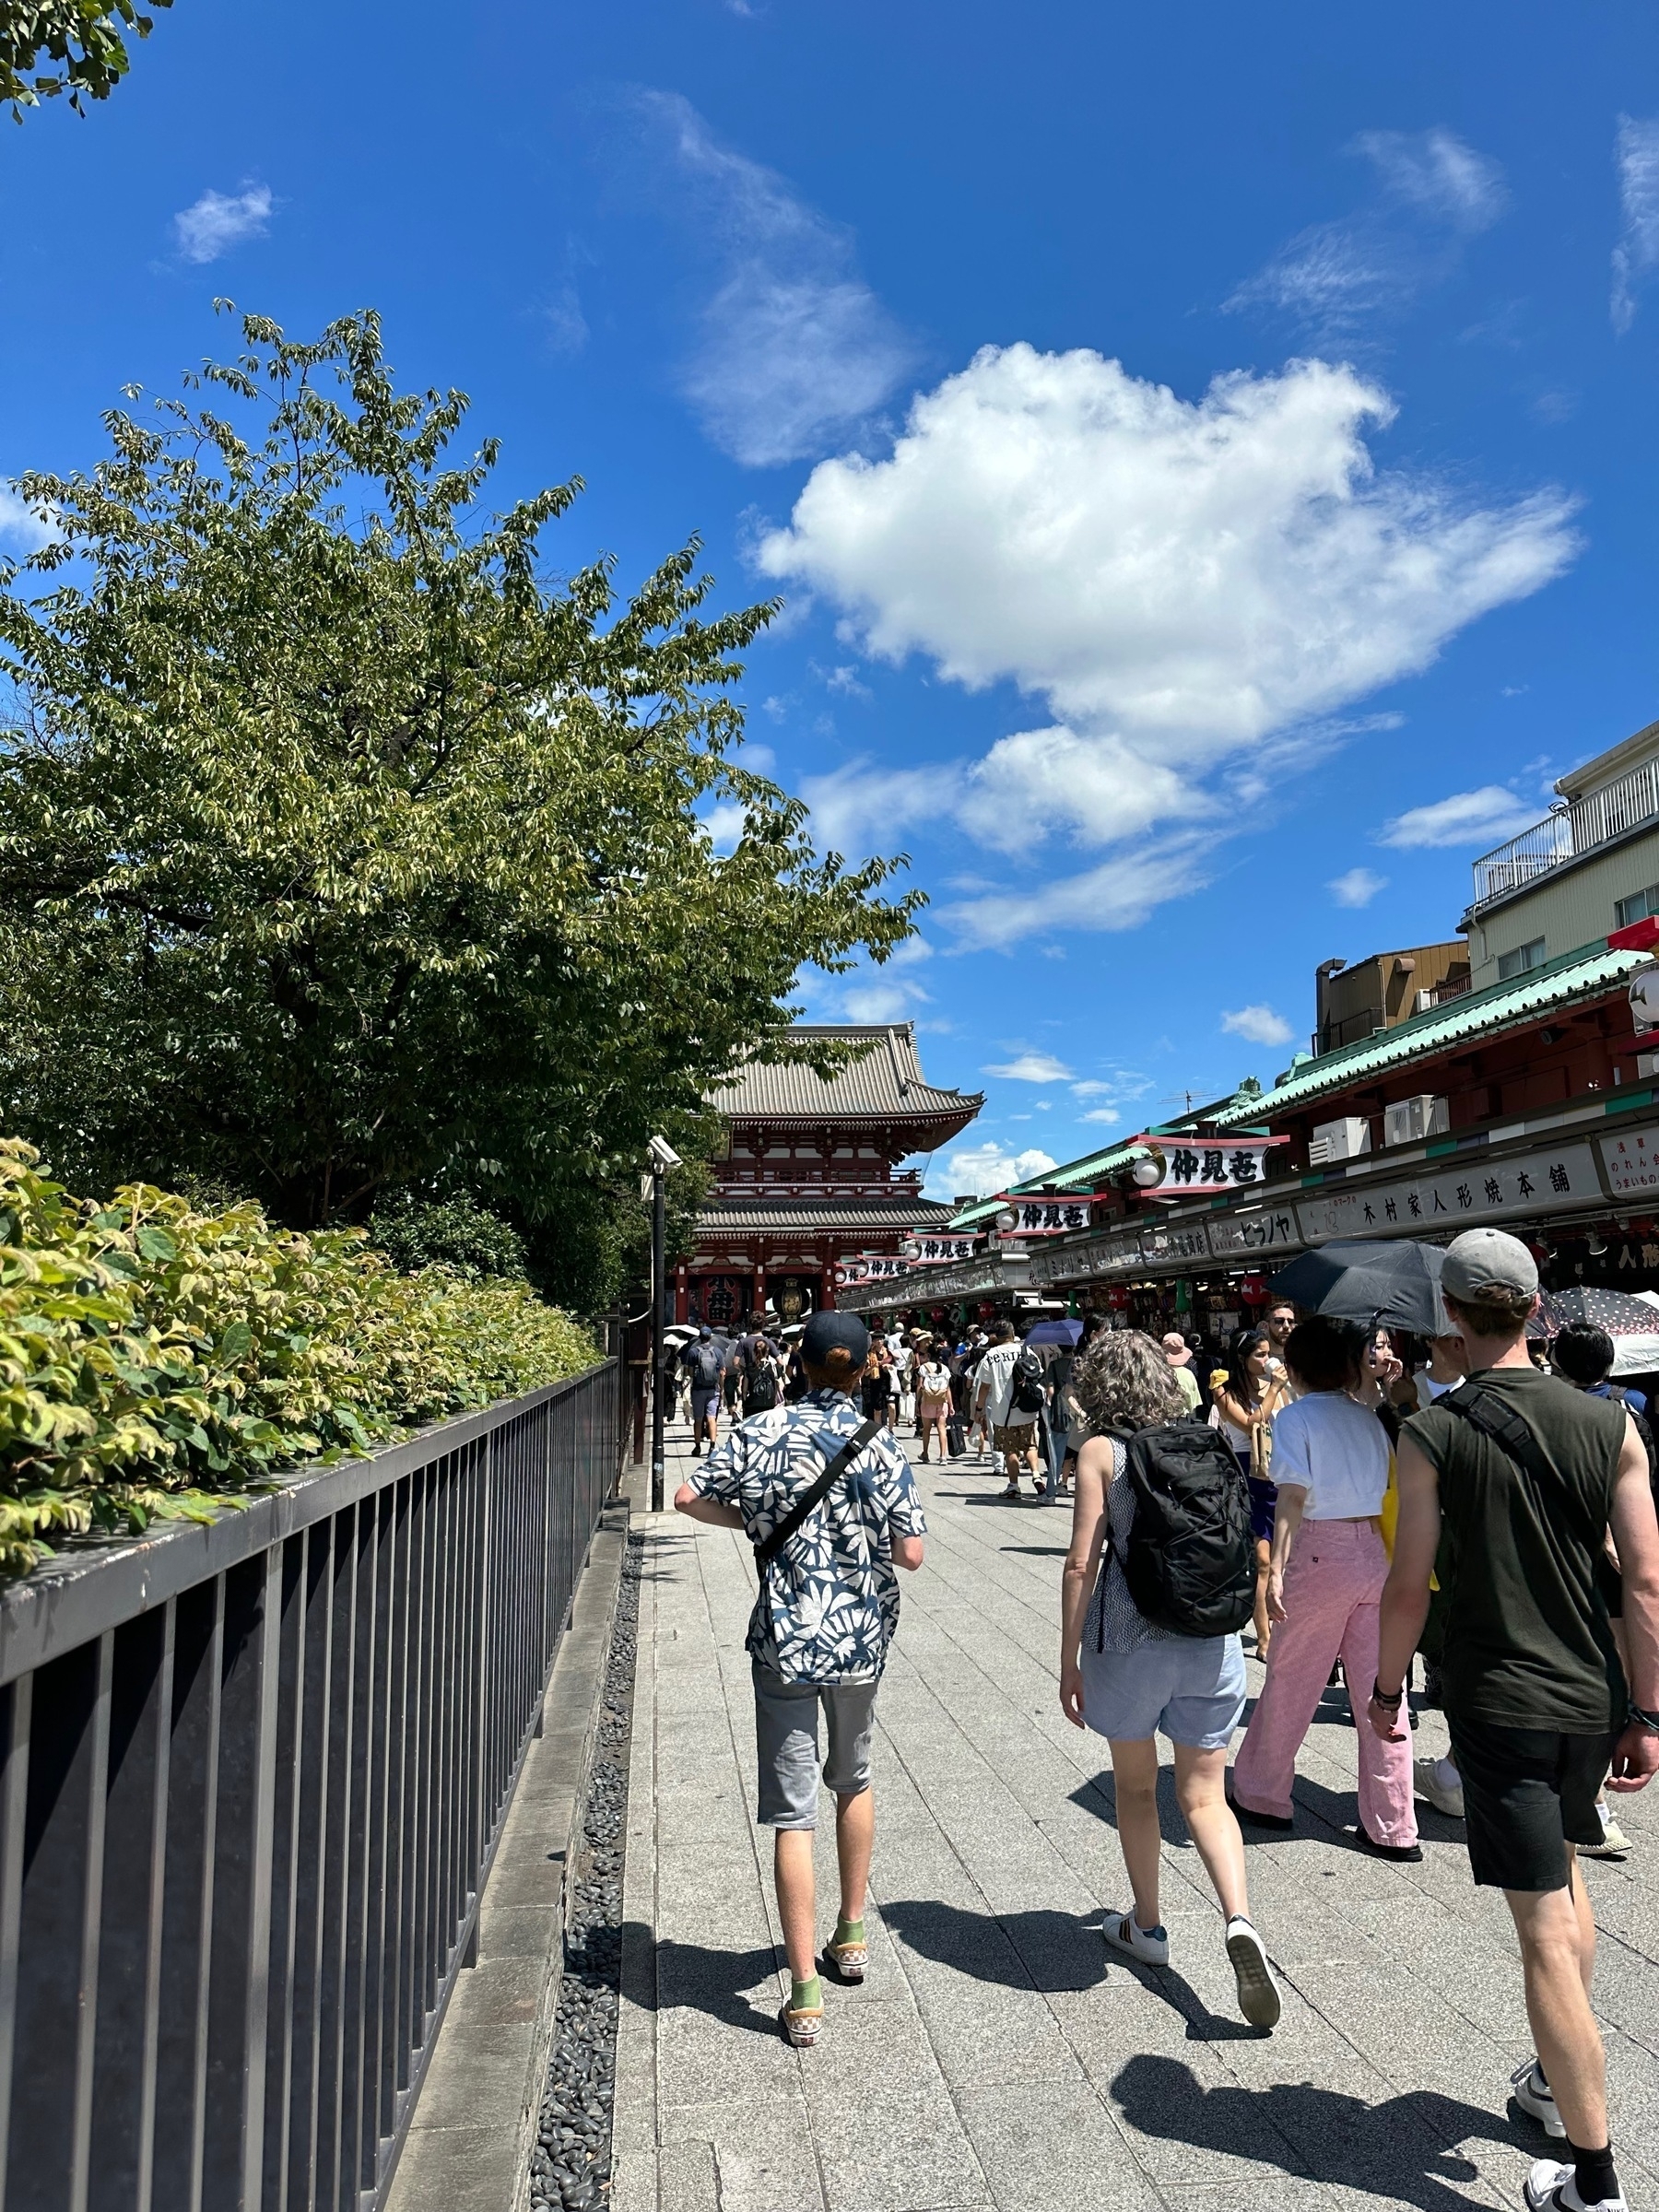 Walking towards Senso-Ji temple on a hot summer day